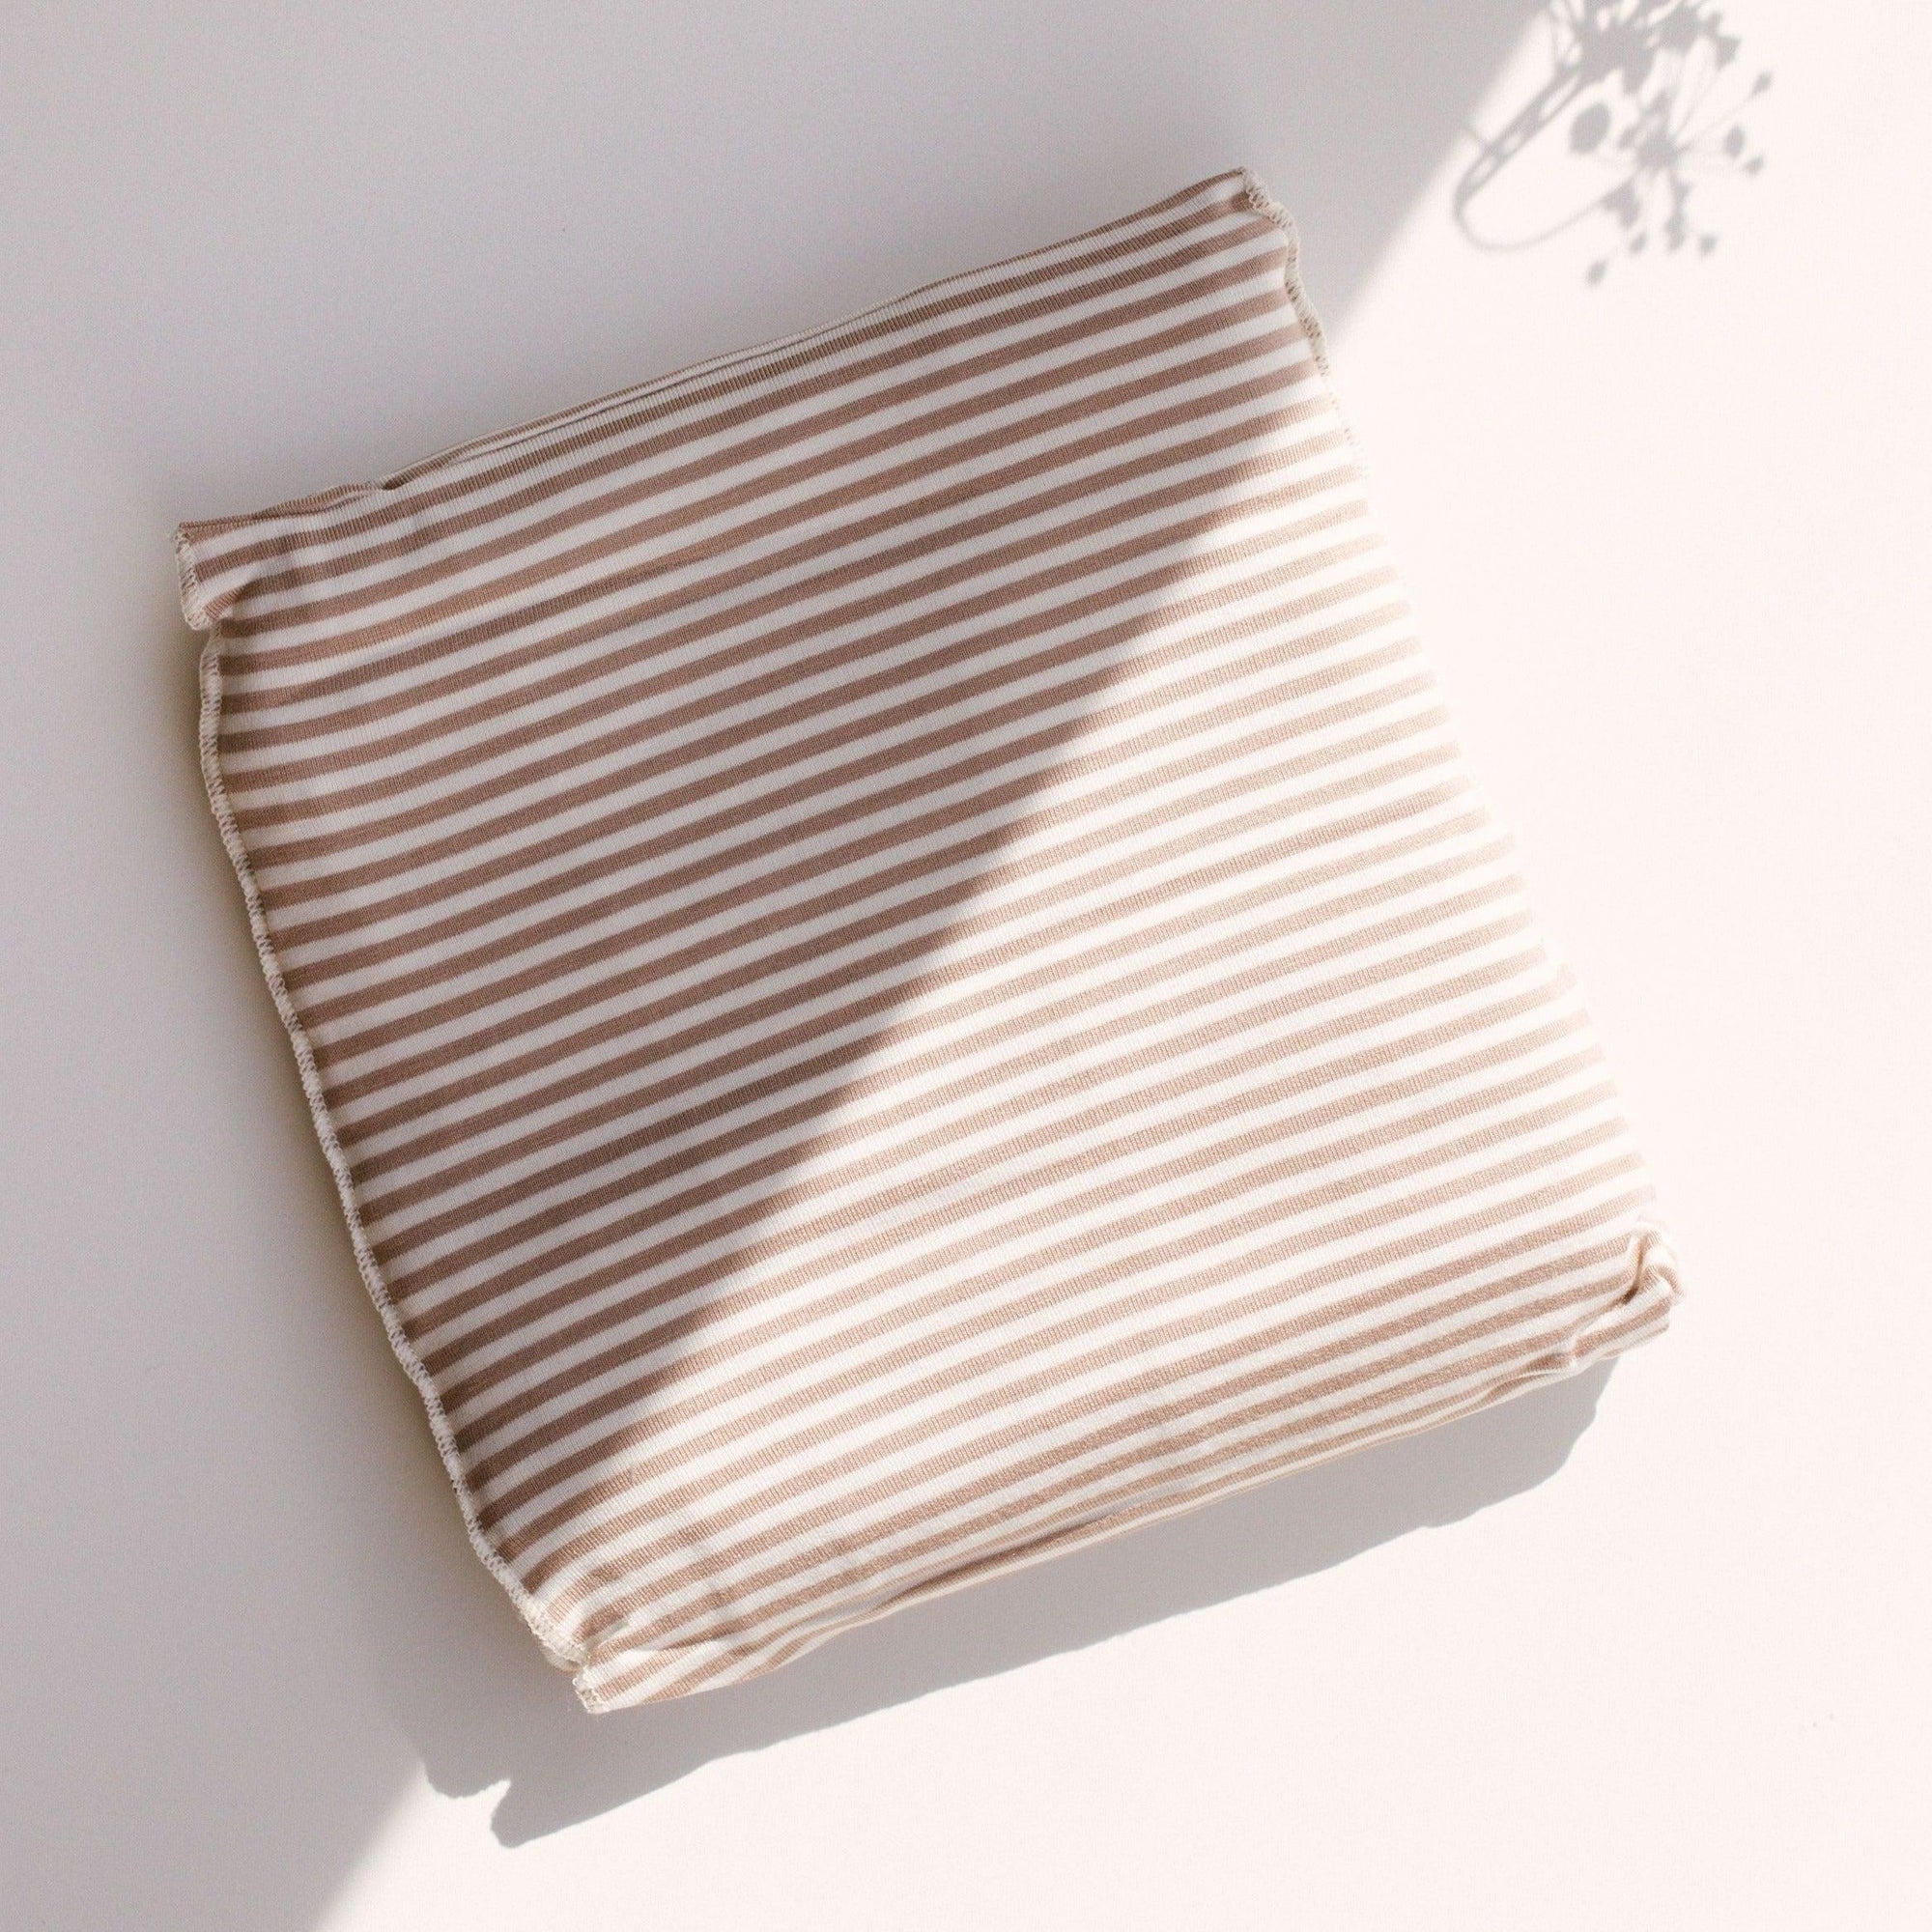 A Cinta Stripe Wrap by Chekoh on a white surface.